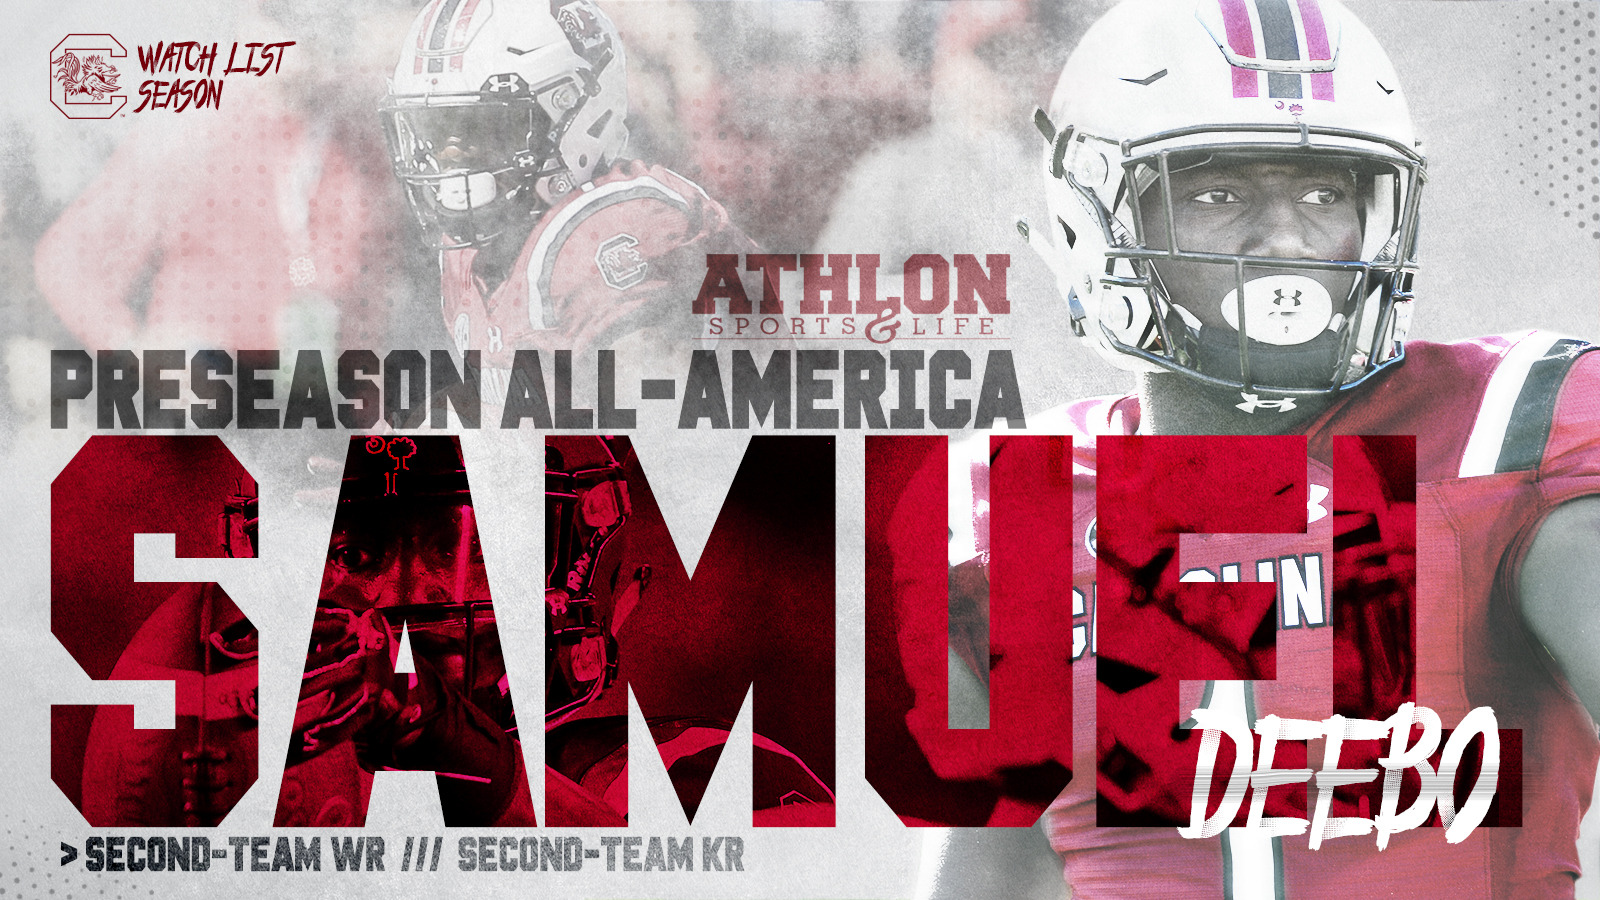 Samuel Named Preseason Second-Team All-America by Athlon